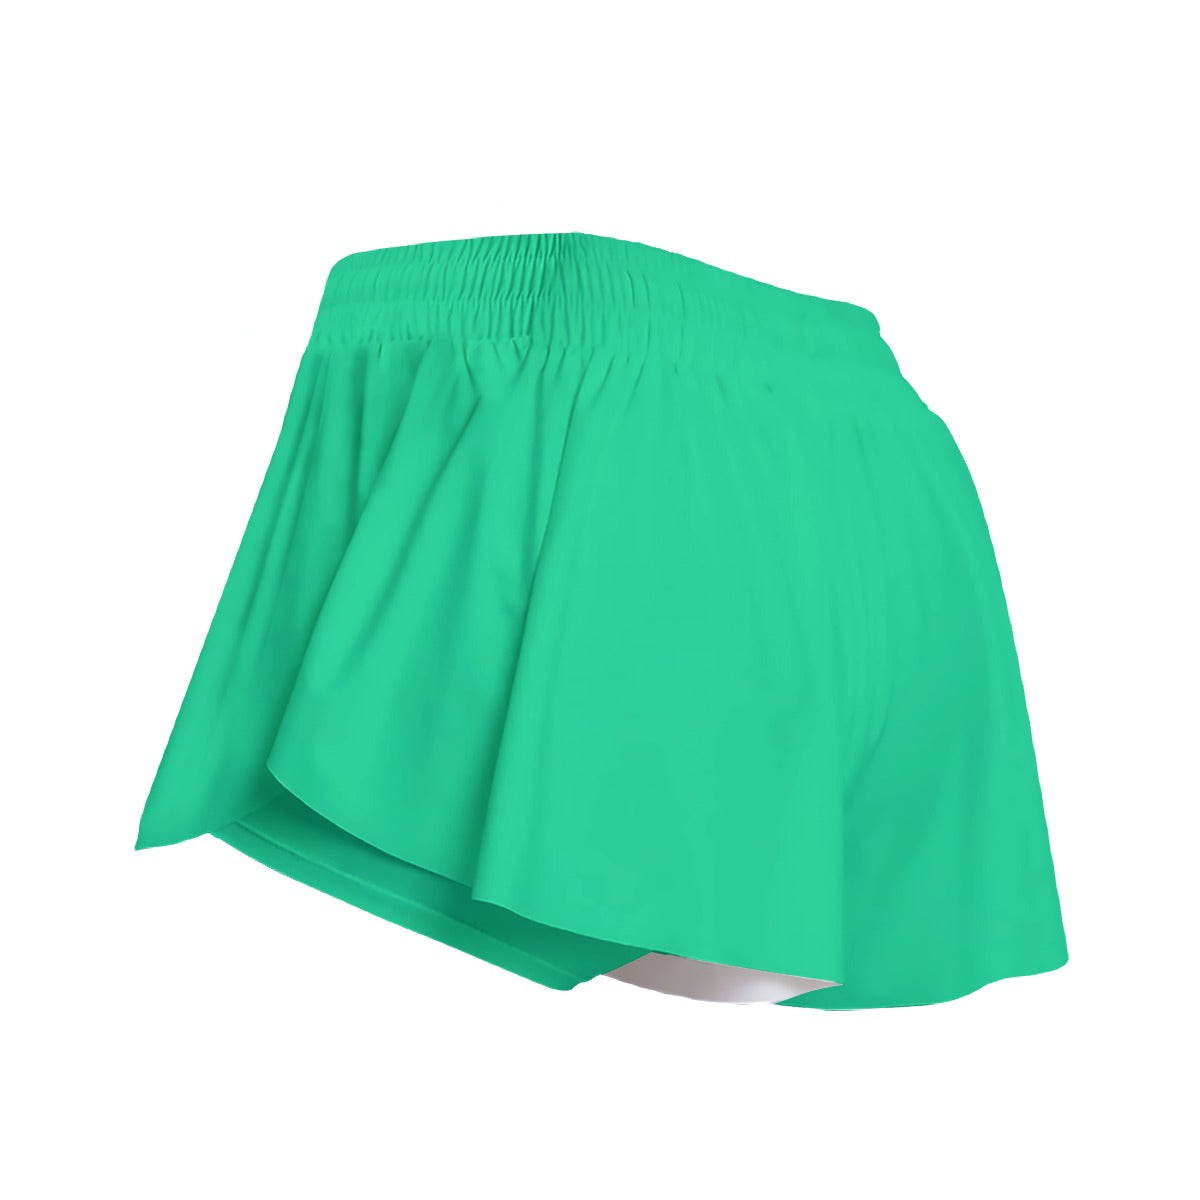 Sixty Eight 93 Logo White Sea Green Women's Sport Skorts With Pocket